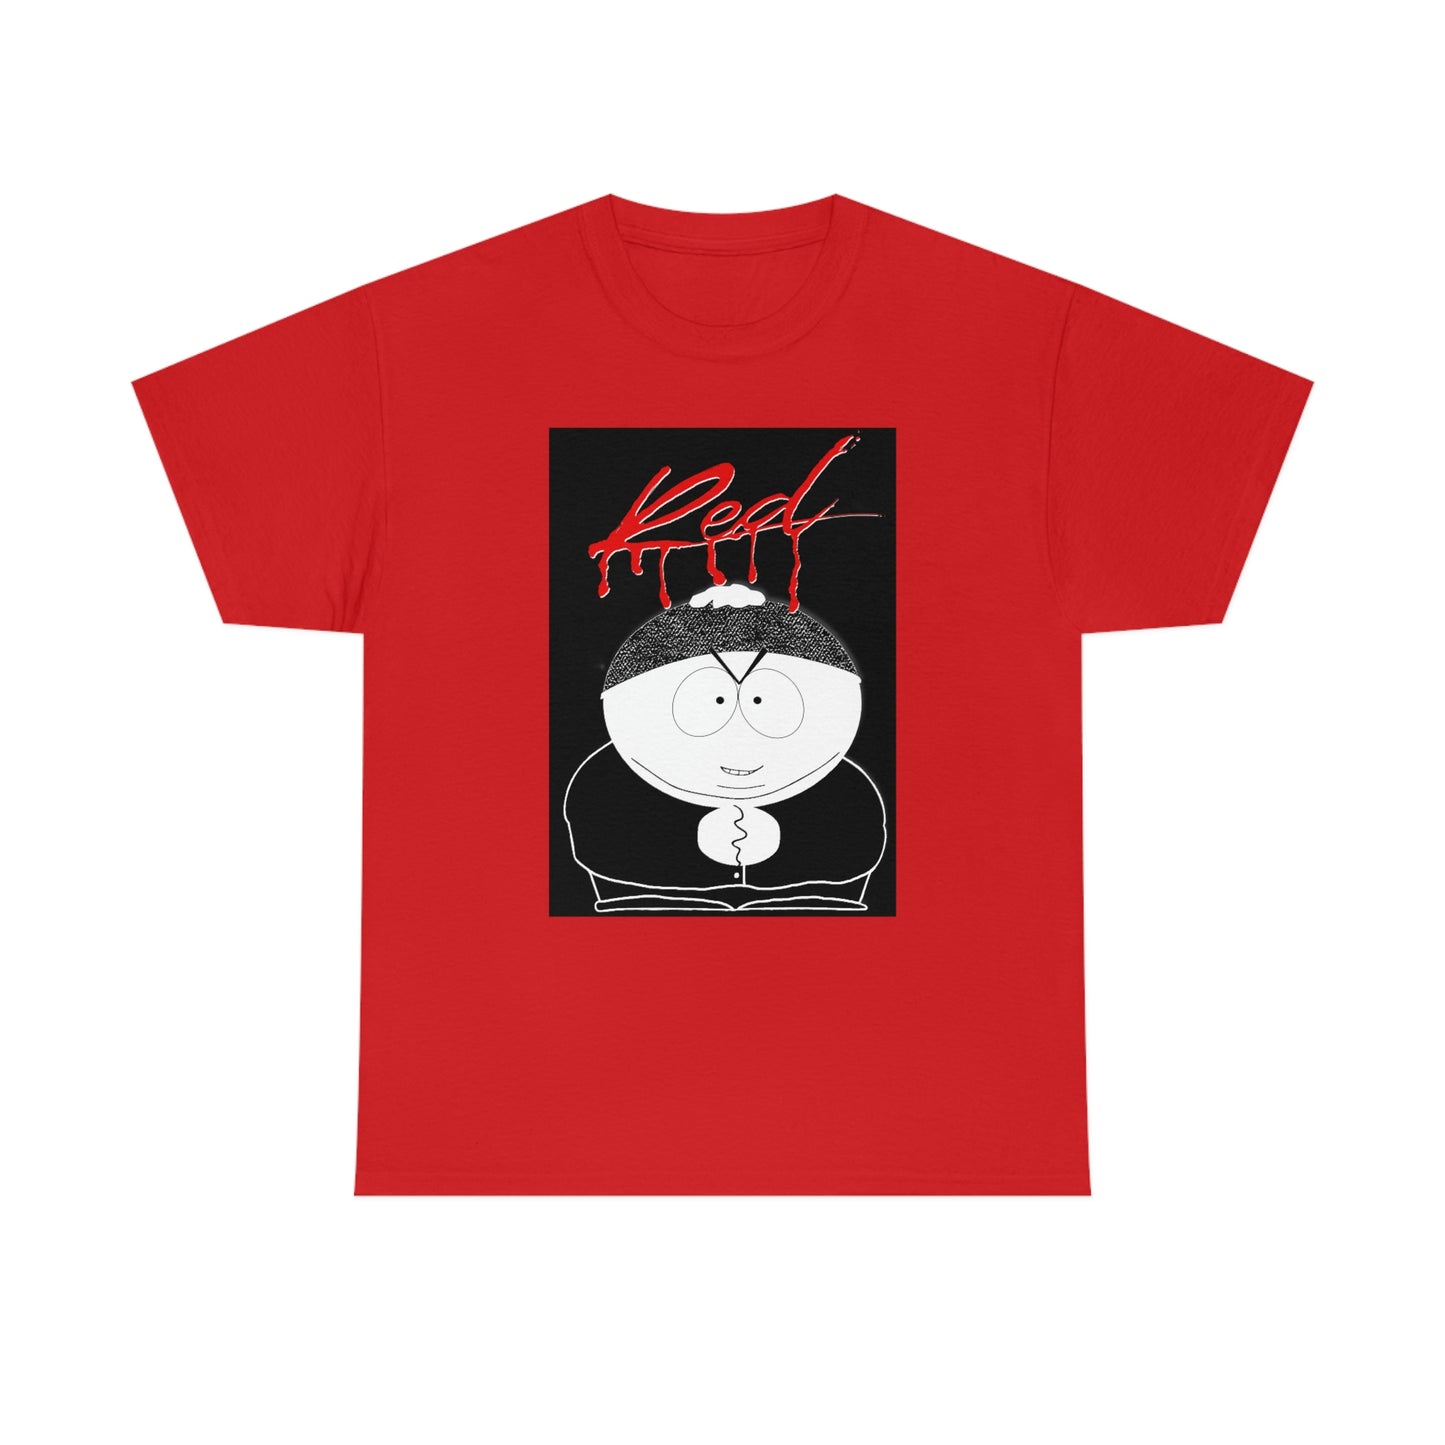 Playboi Cartman (Eric Cartman from South Park) Whole Lotta Red Album Cover - Unisex Heavy Cotton Tee